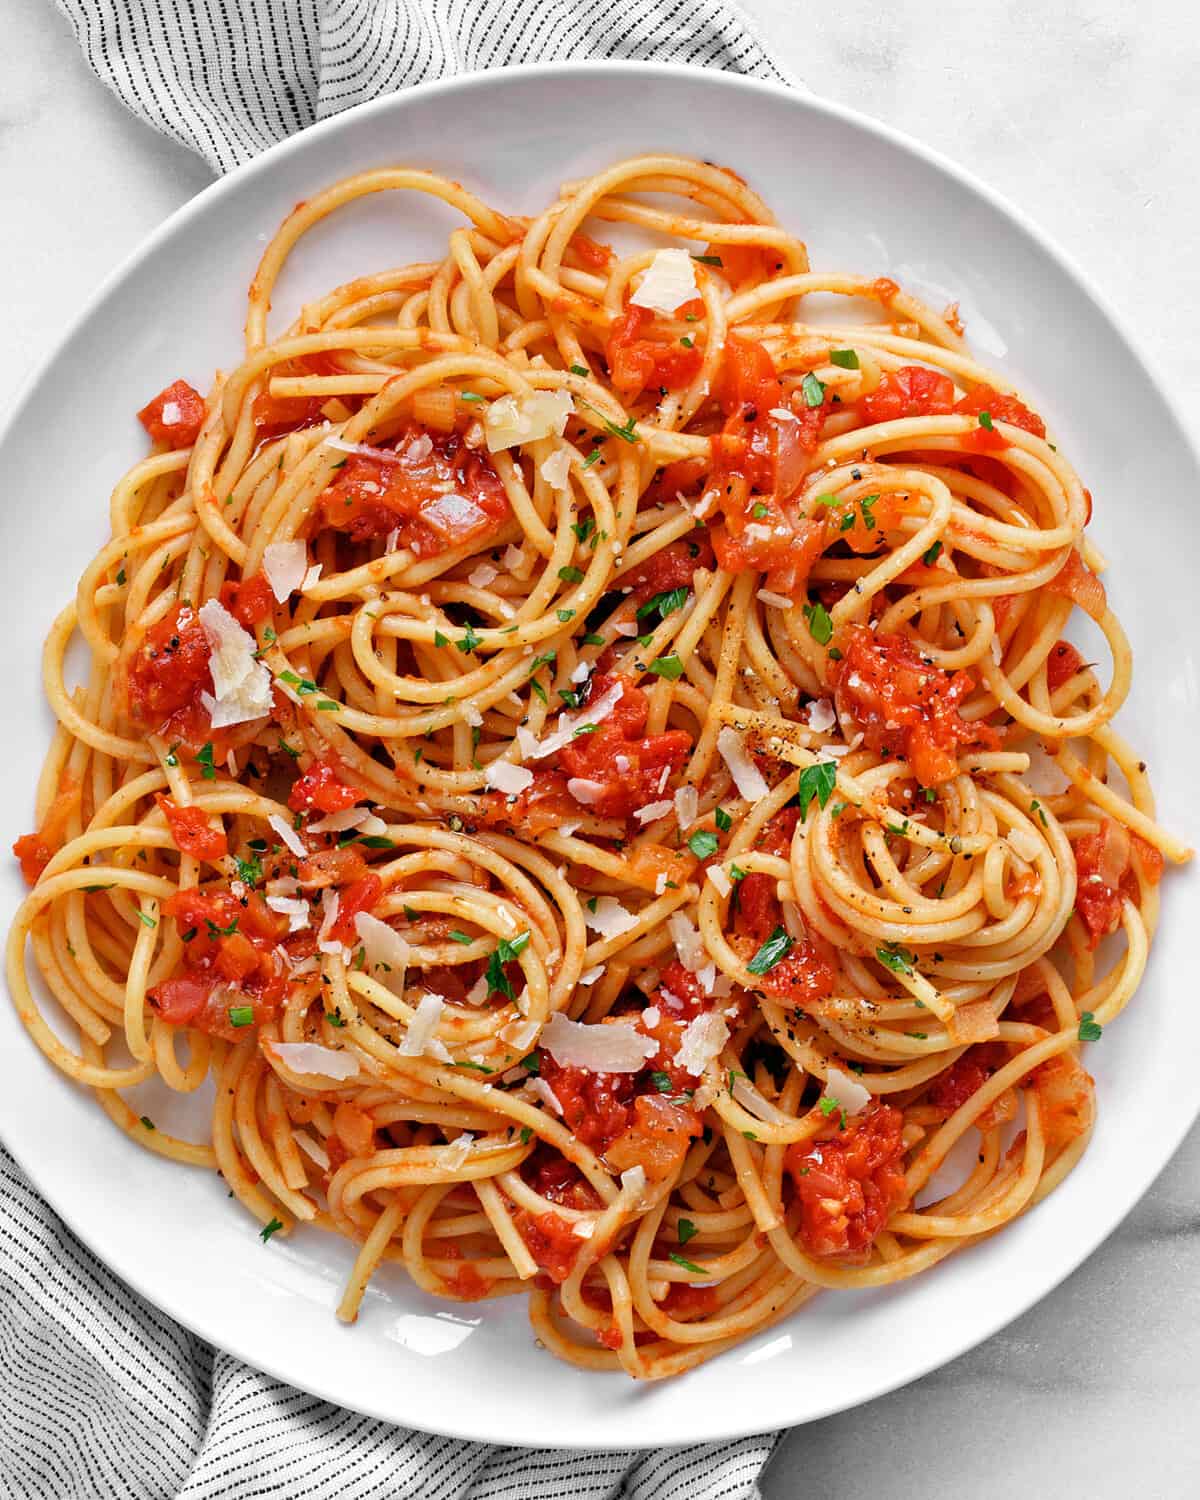 Spaghetti with roma tomato sauce on a plate.